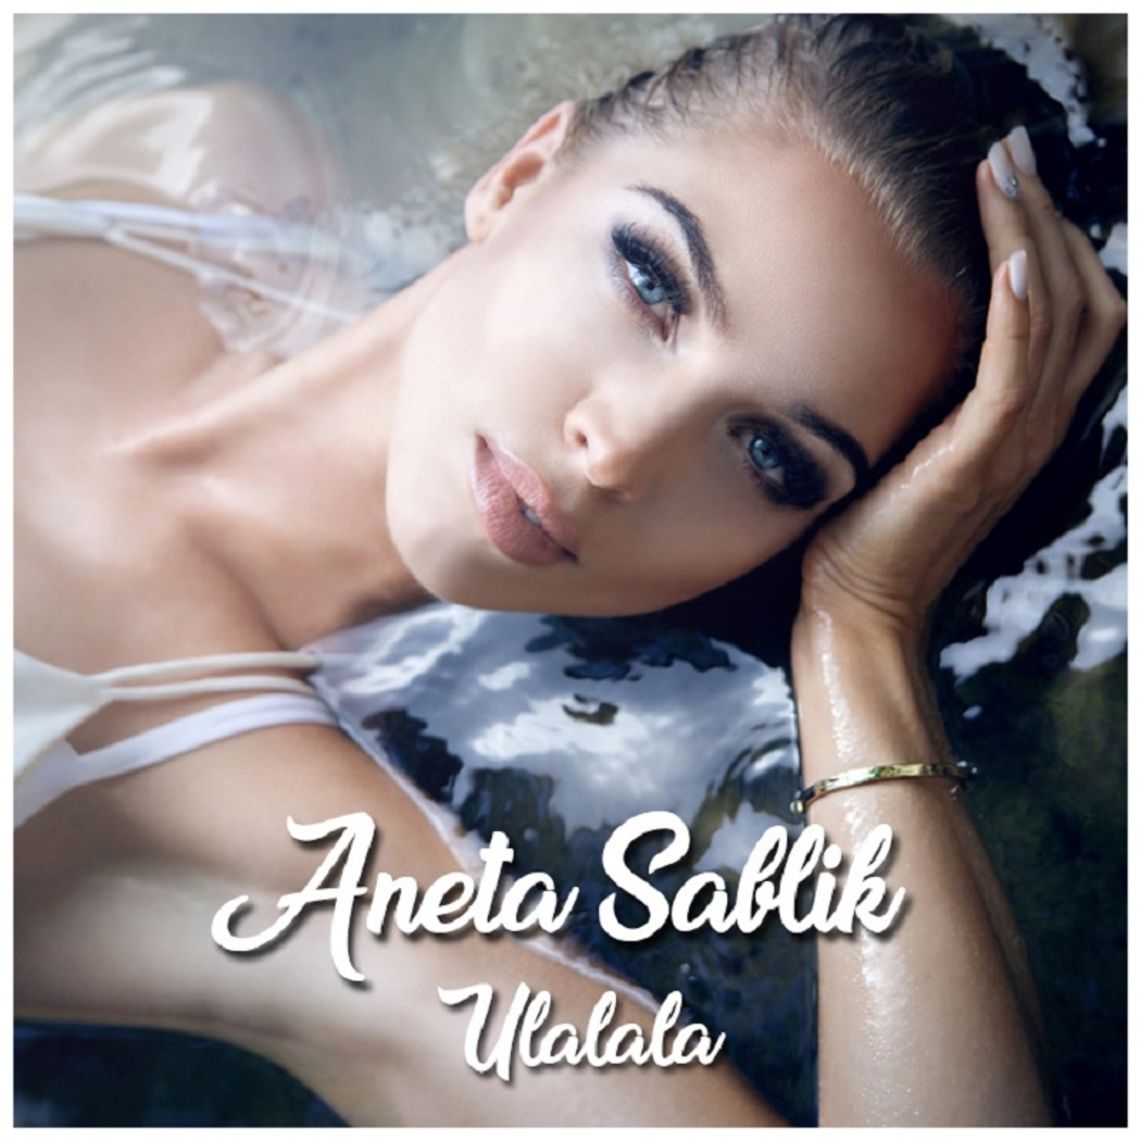 Aneta Sablik - Ulalala